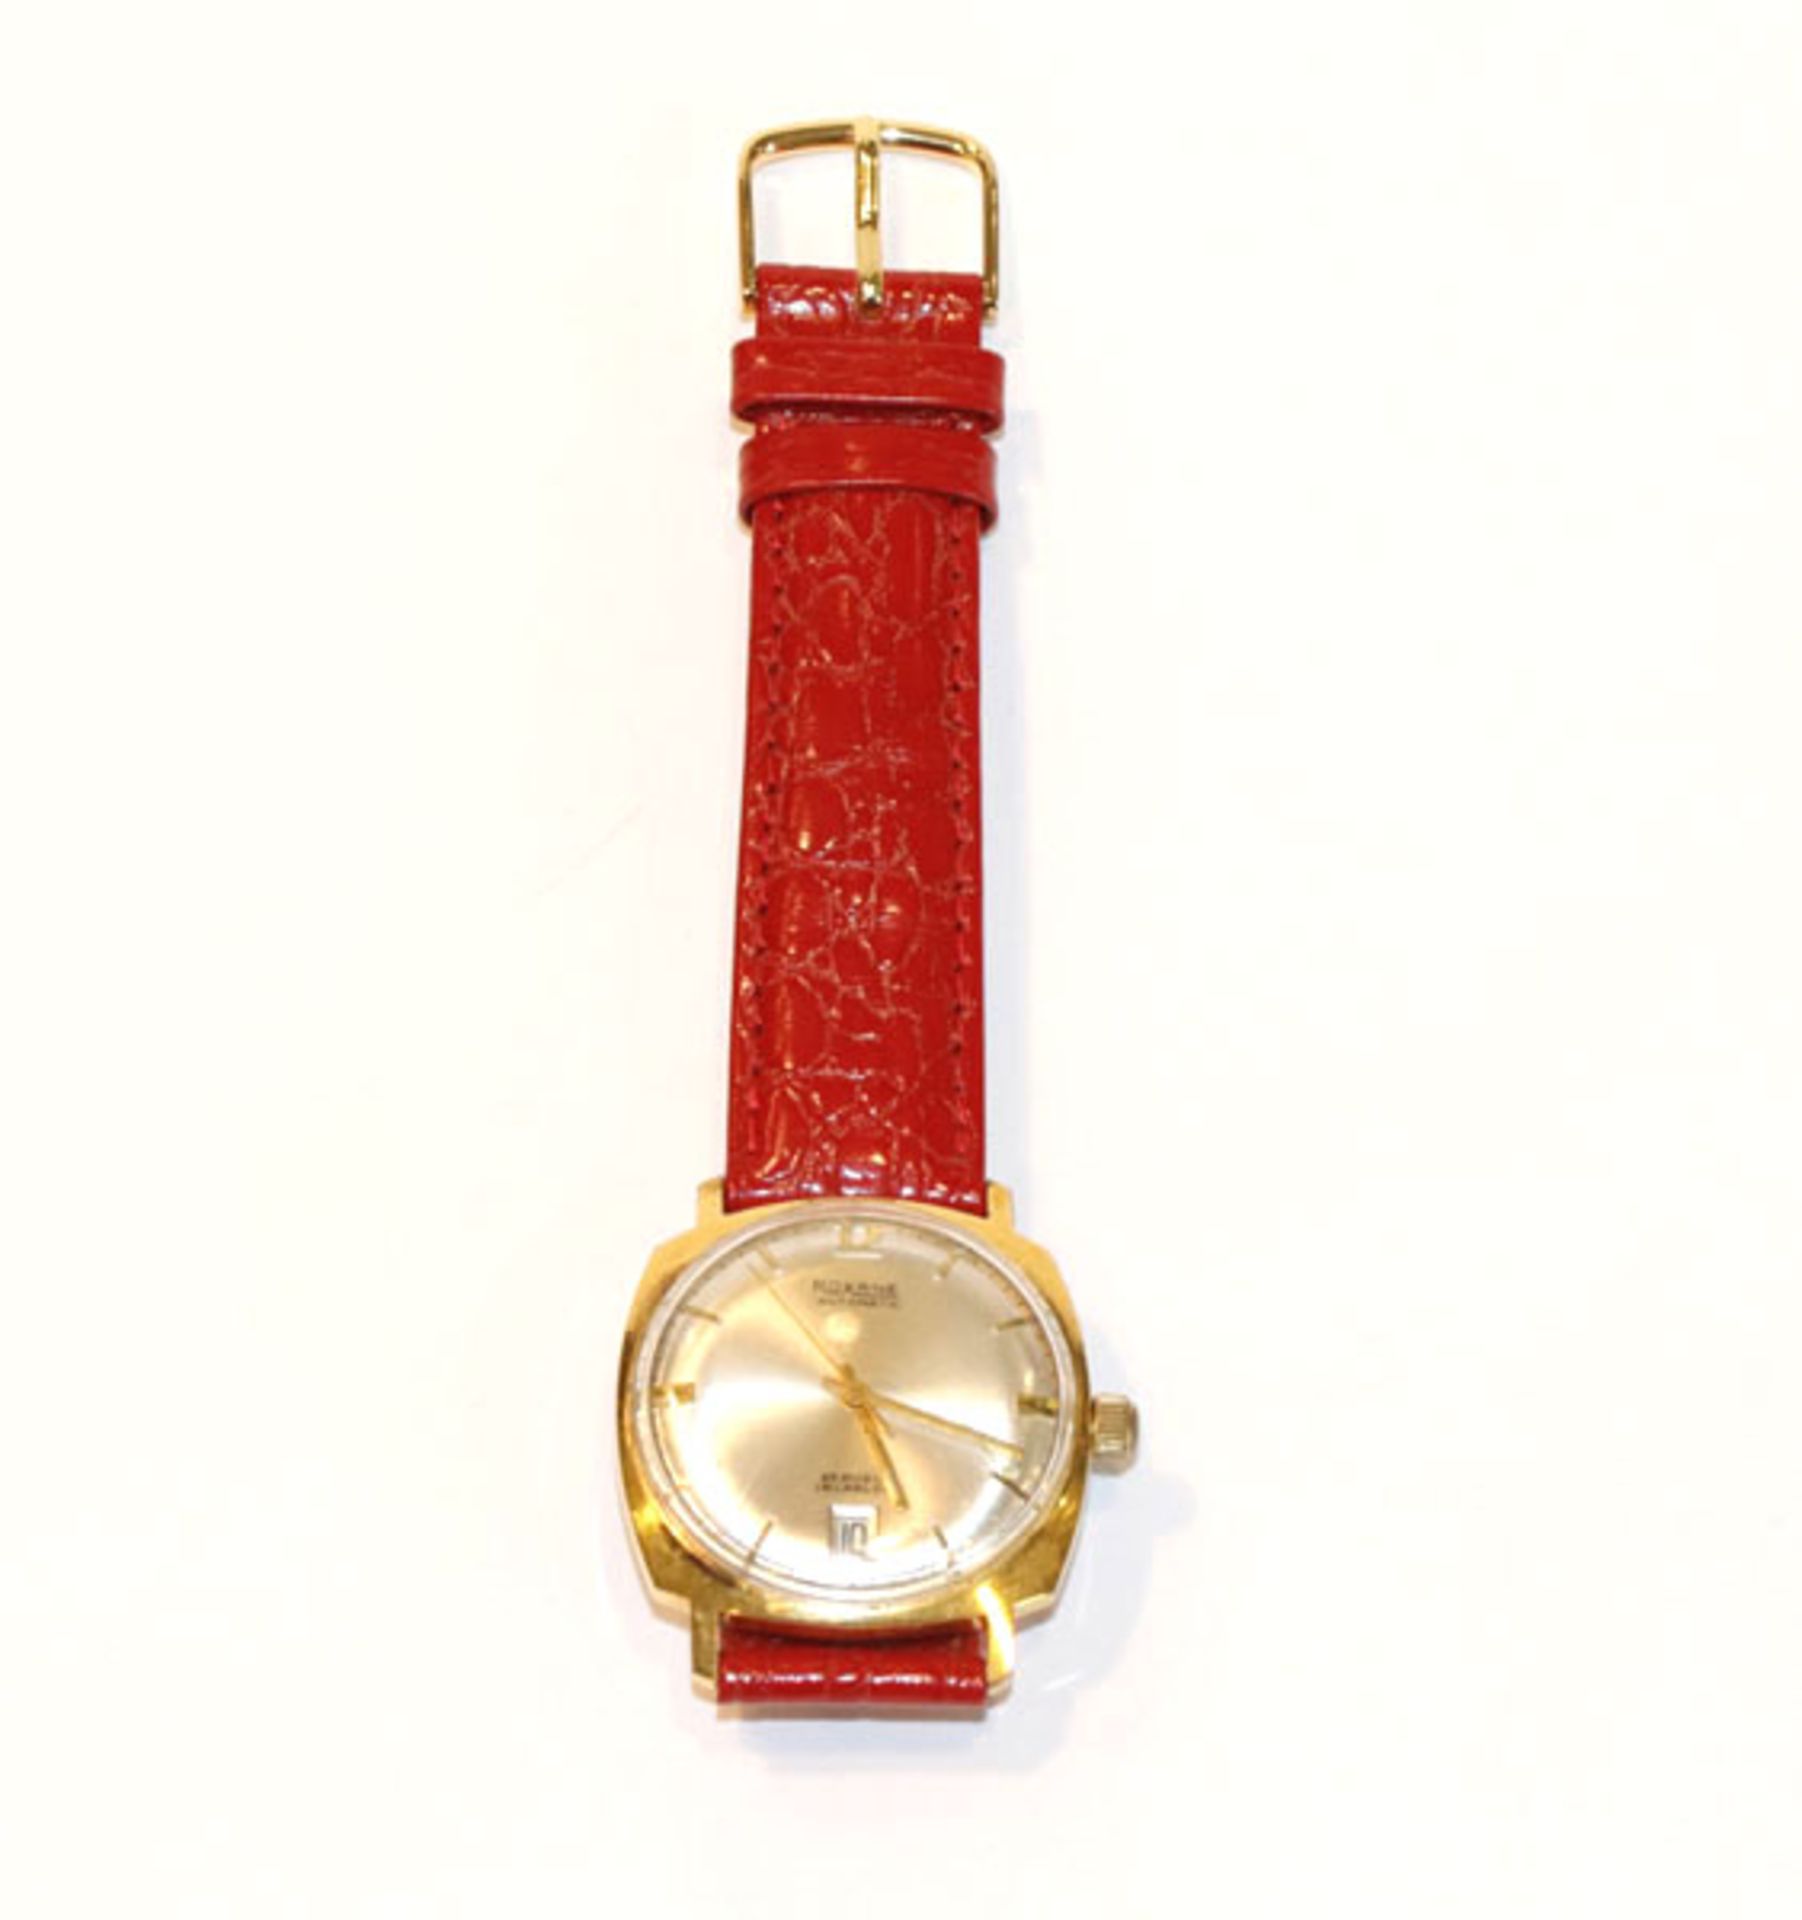 Roxane Automatic Armbanduhr mit Datumsanzeige, um 1965, intakt, Tragespuren, an rotem Armband